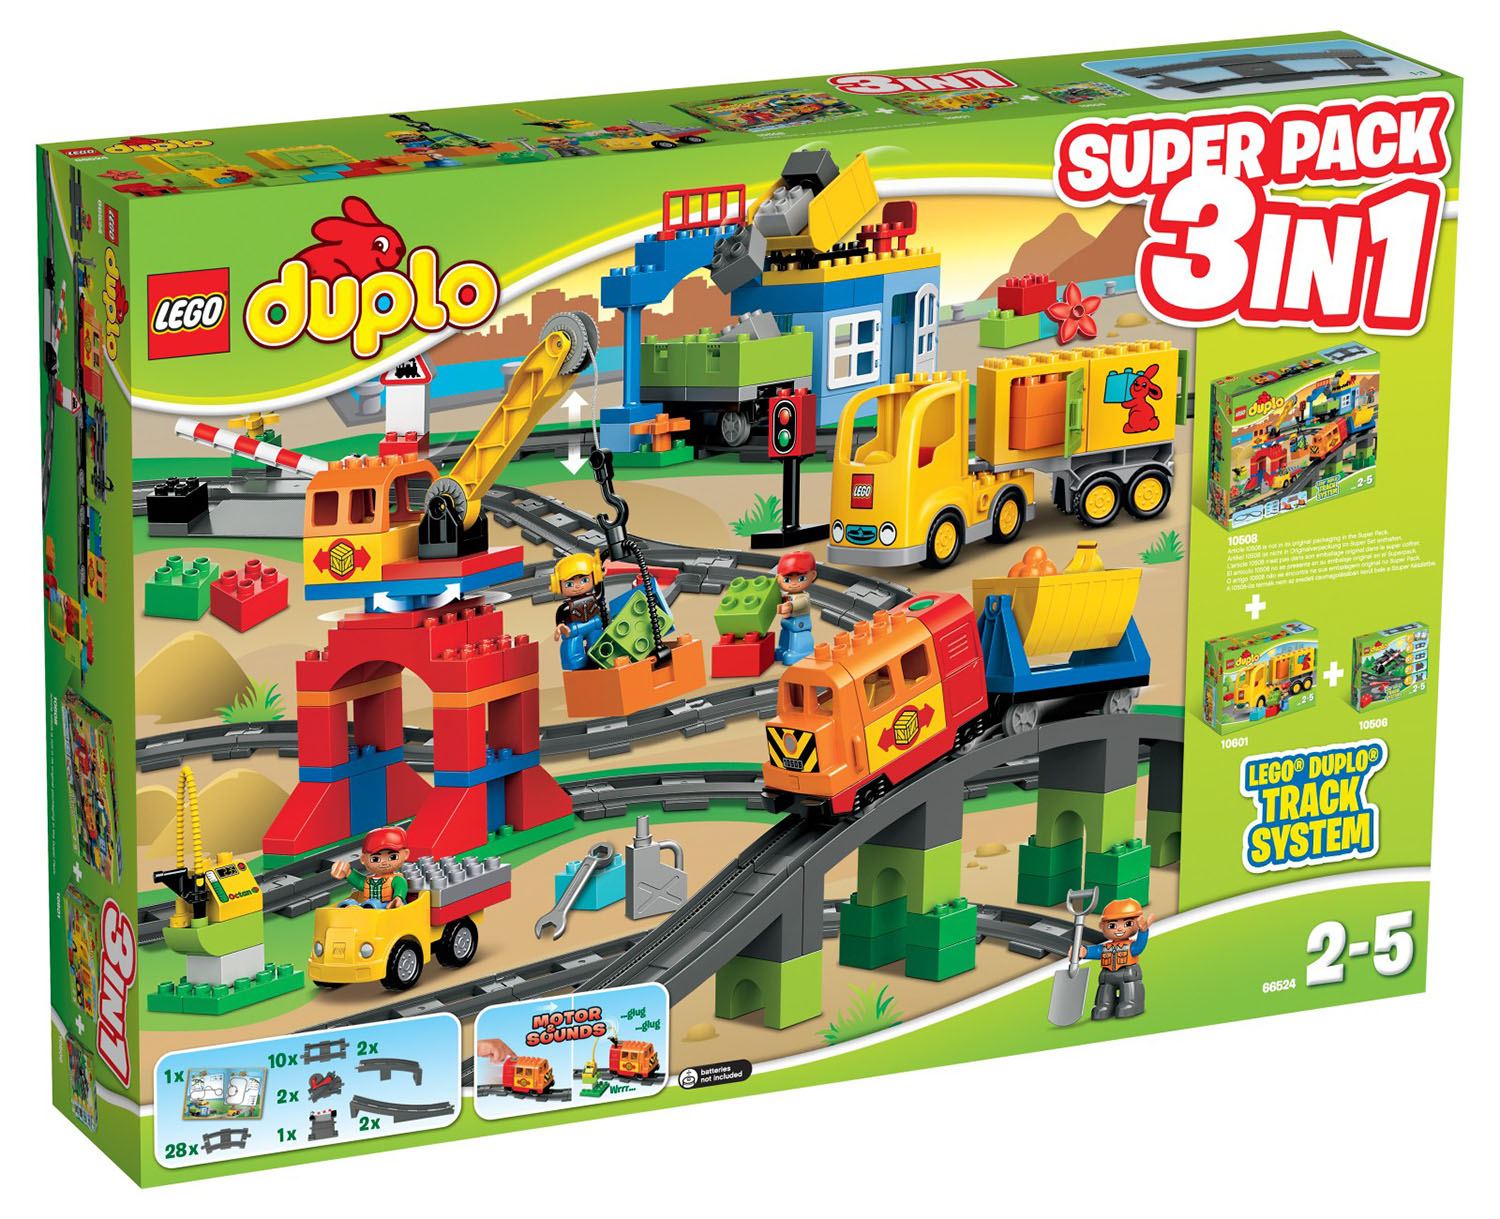 LEGO Duplo 66524 pas cher, Super Pack 3-in-1: Mon train de luxe